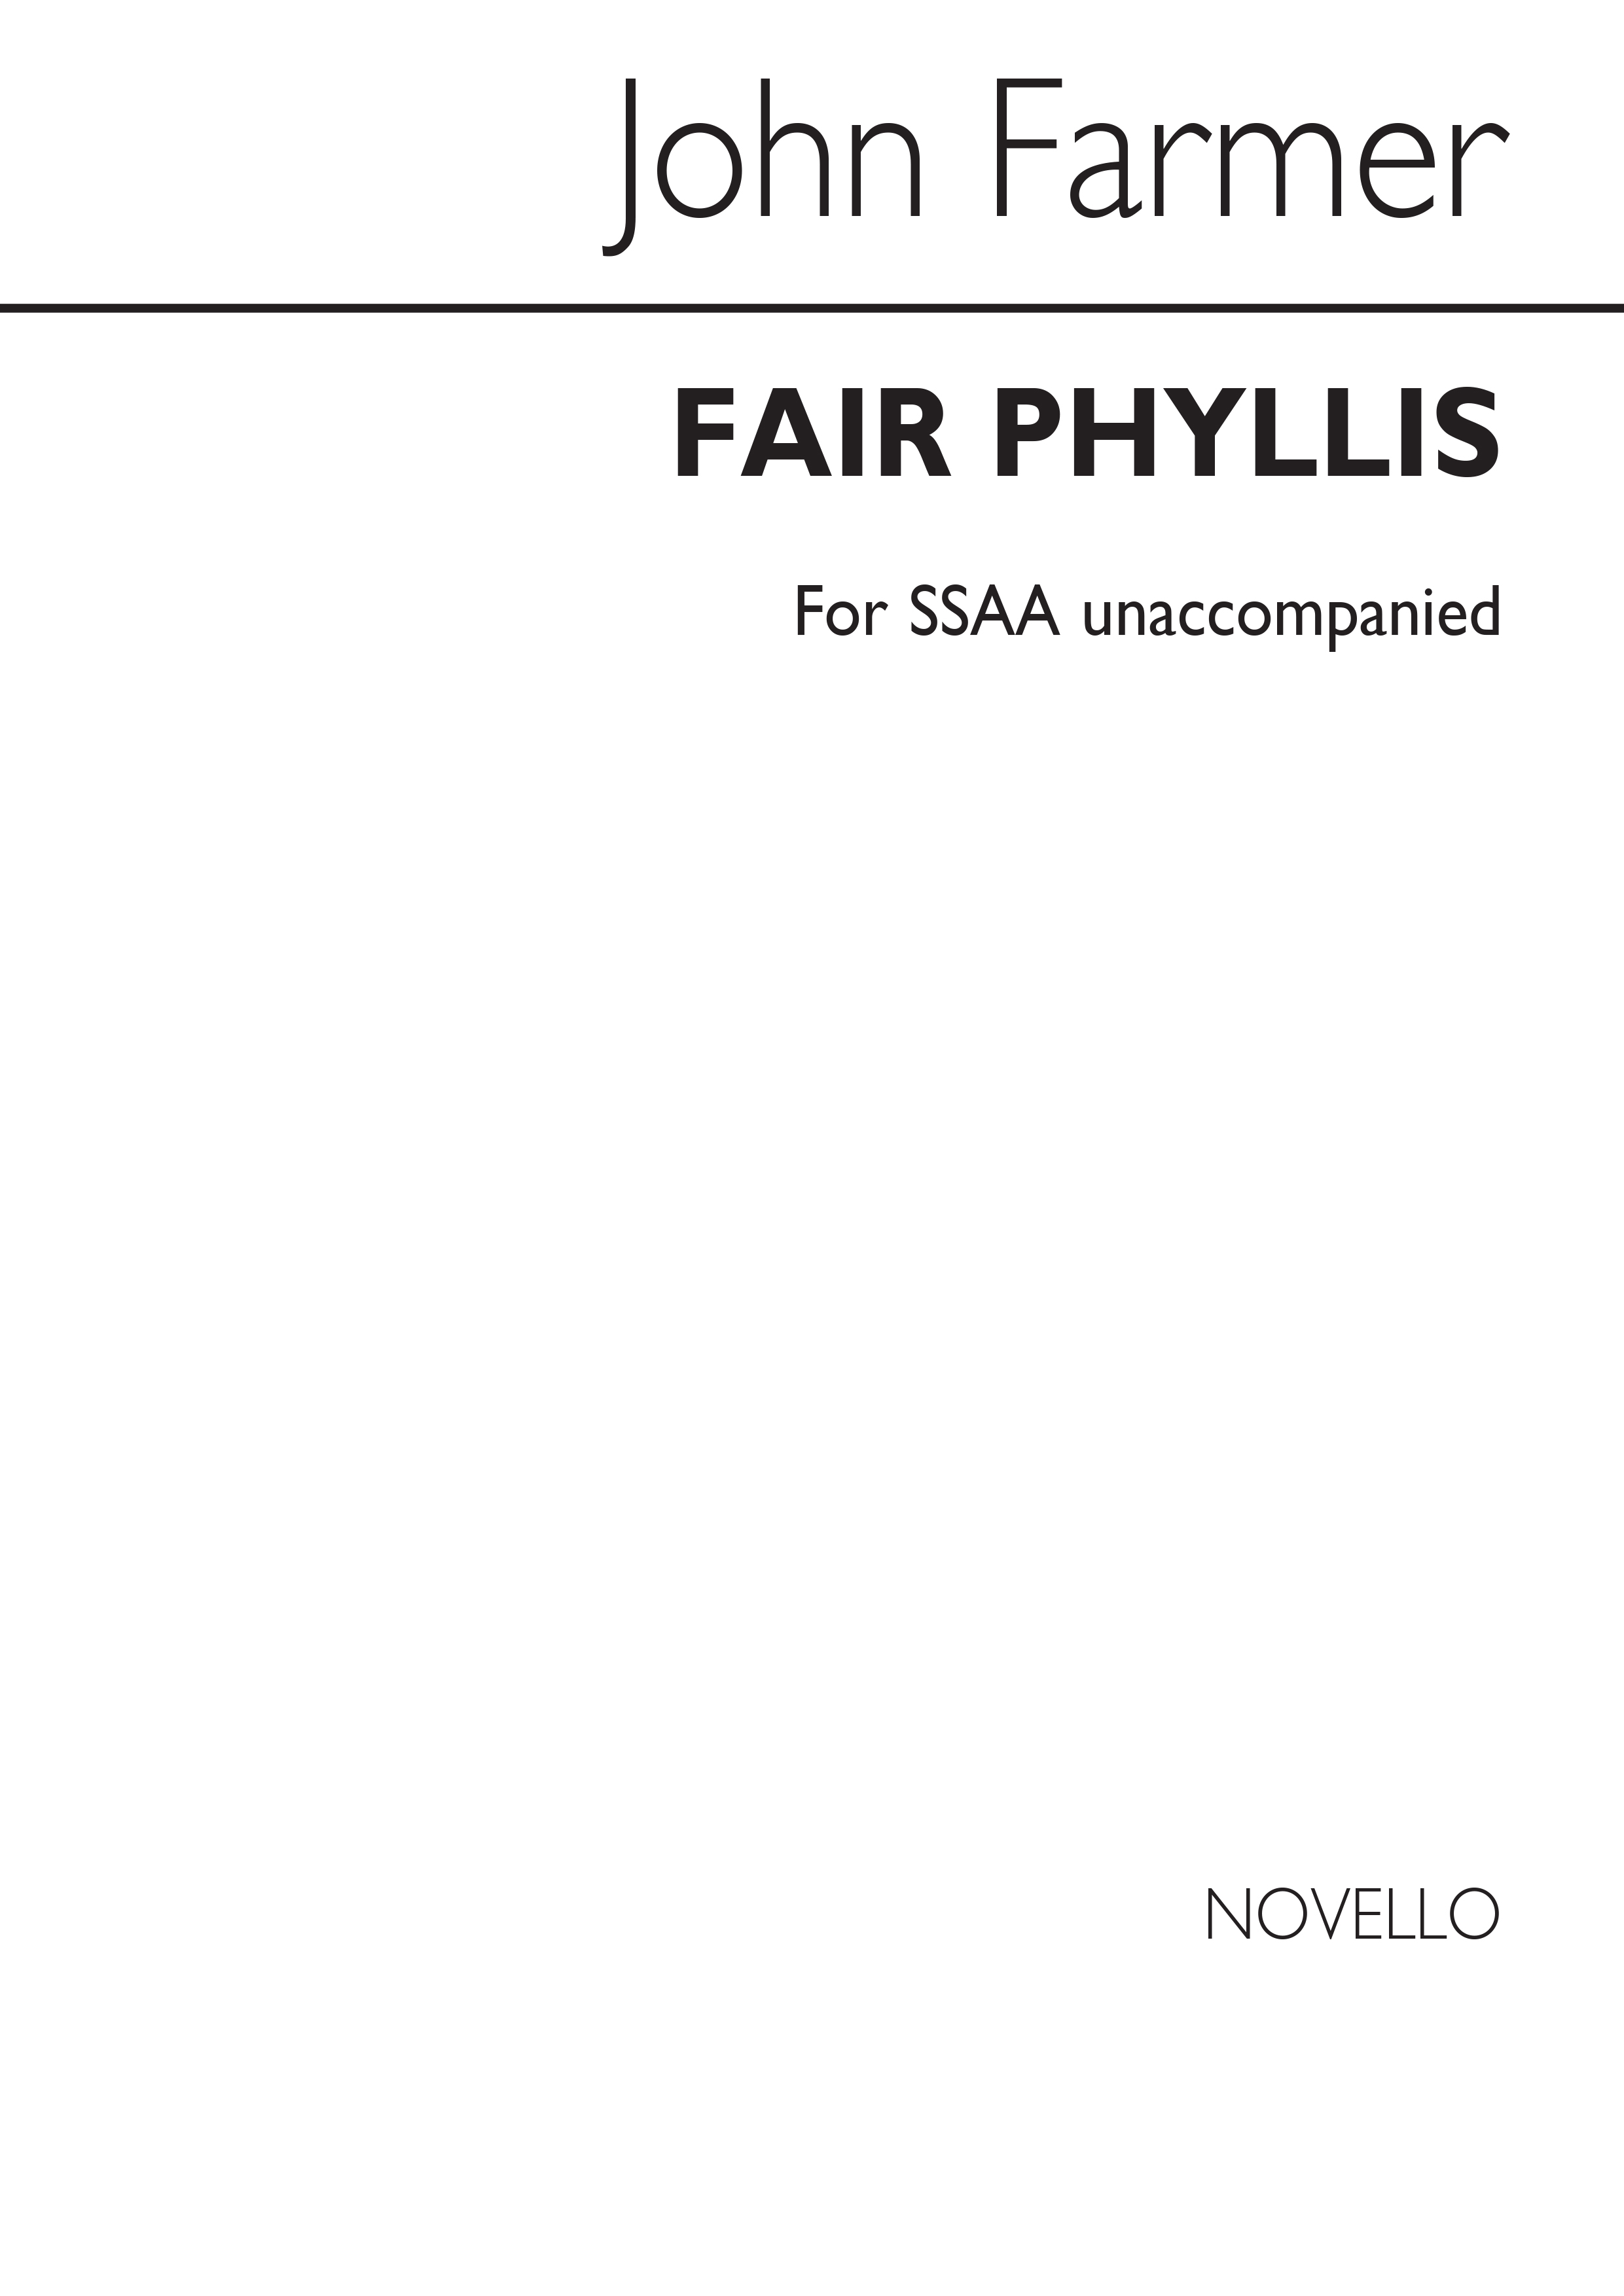 John Farmer: Fair Phyllis (SSAA)